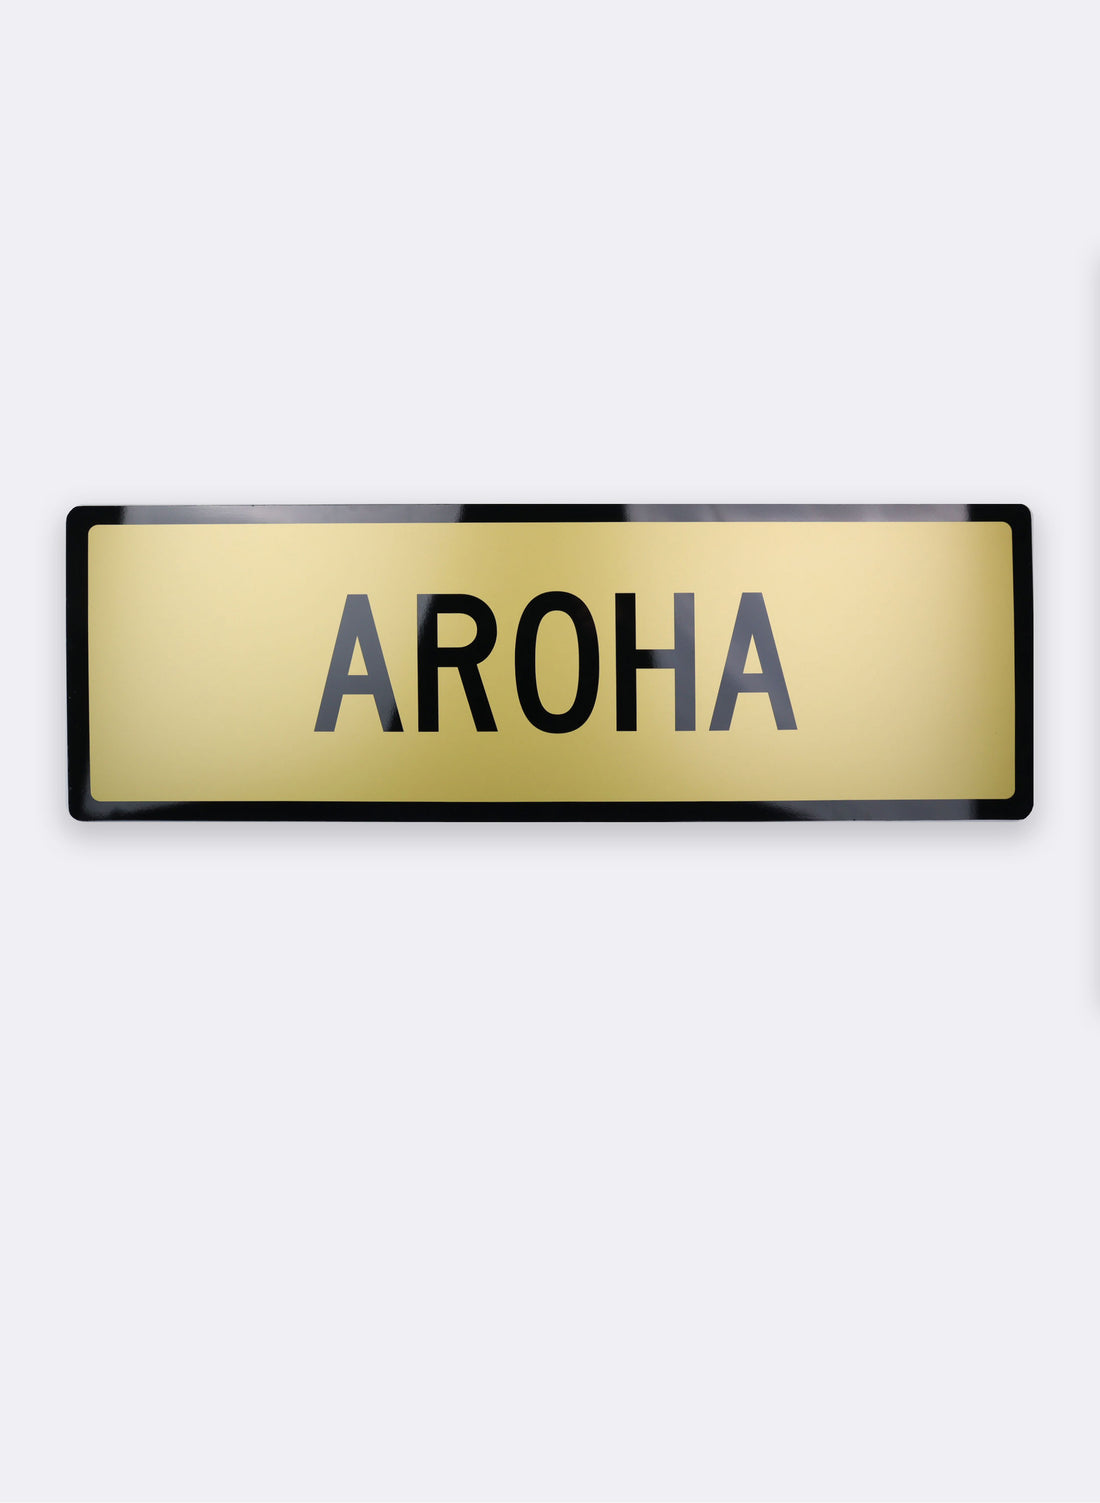 Aroha - Road Sign Art